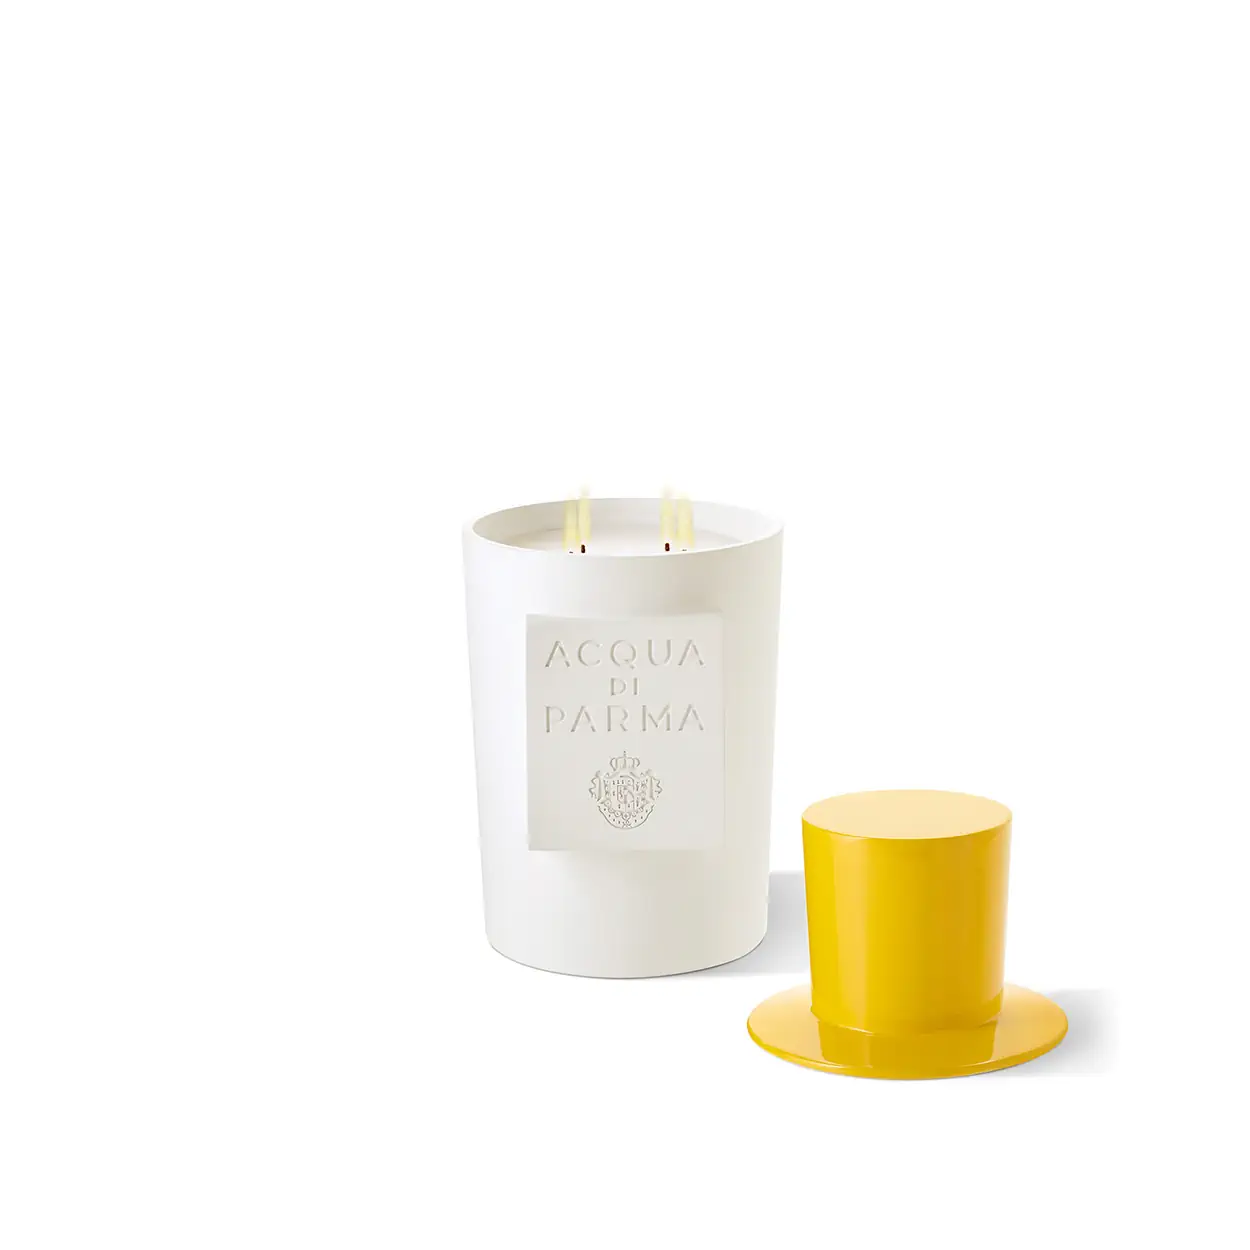 Acqua di Parma's Candle Chapeau! Redefining luxury home fragrance